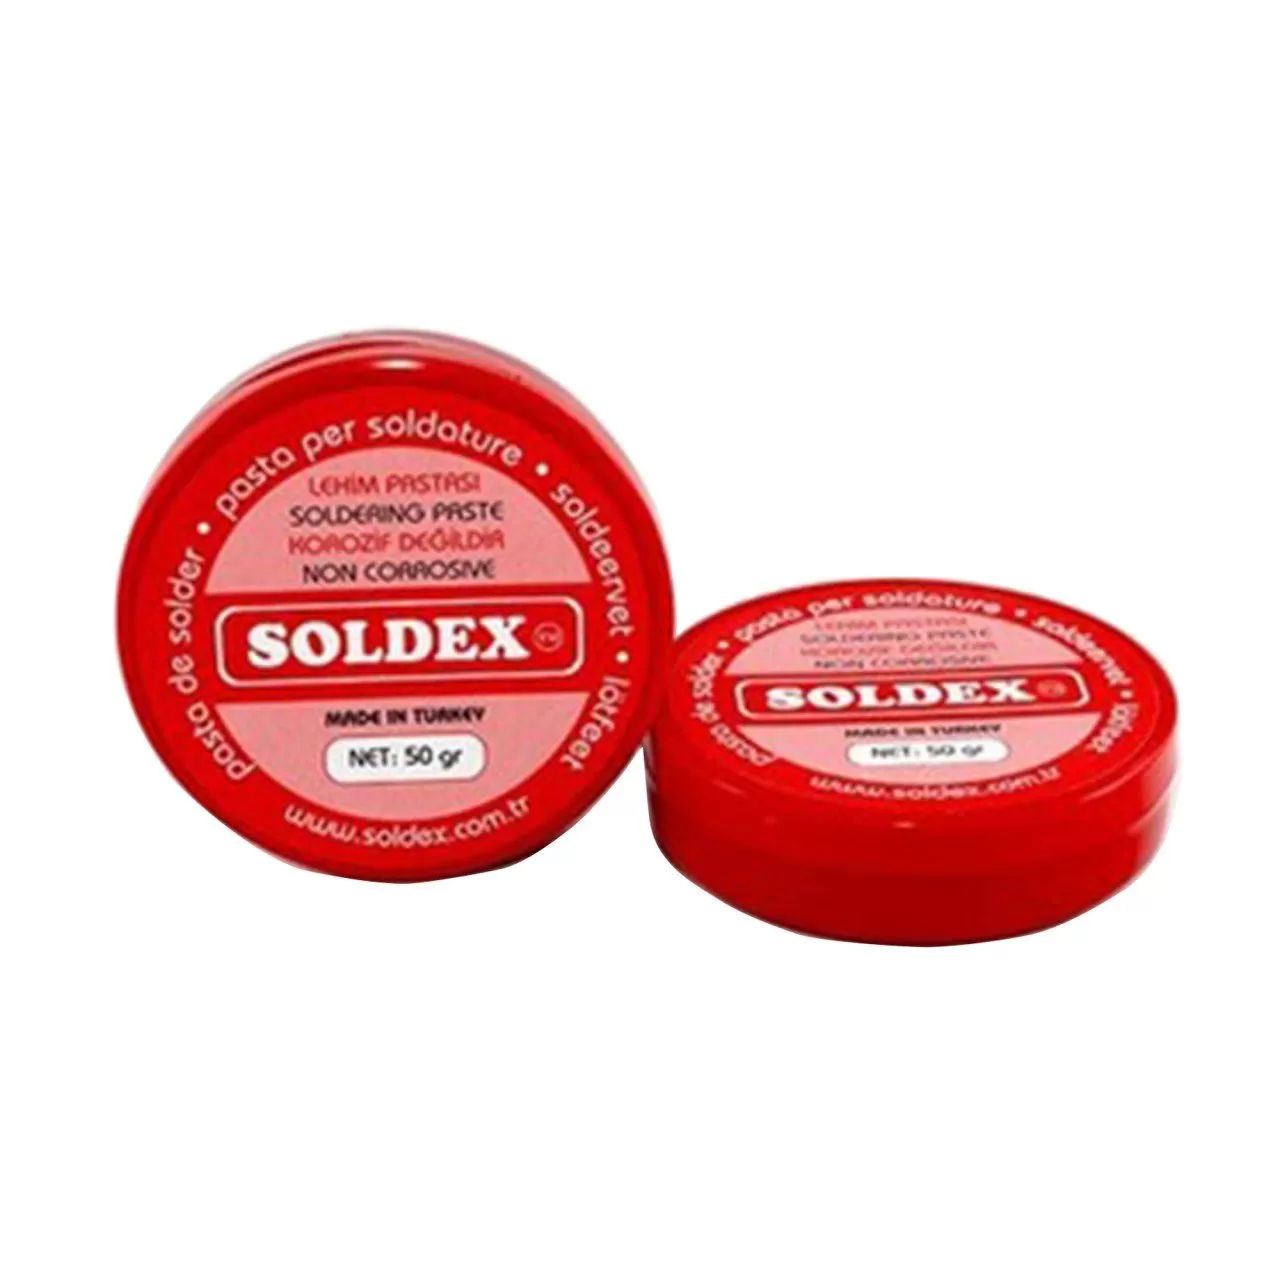 Soldex Lehim Pastası Soldier Paste 50gr